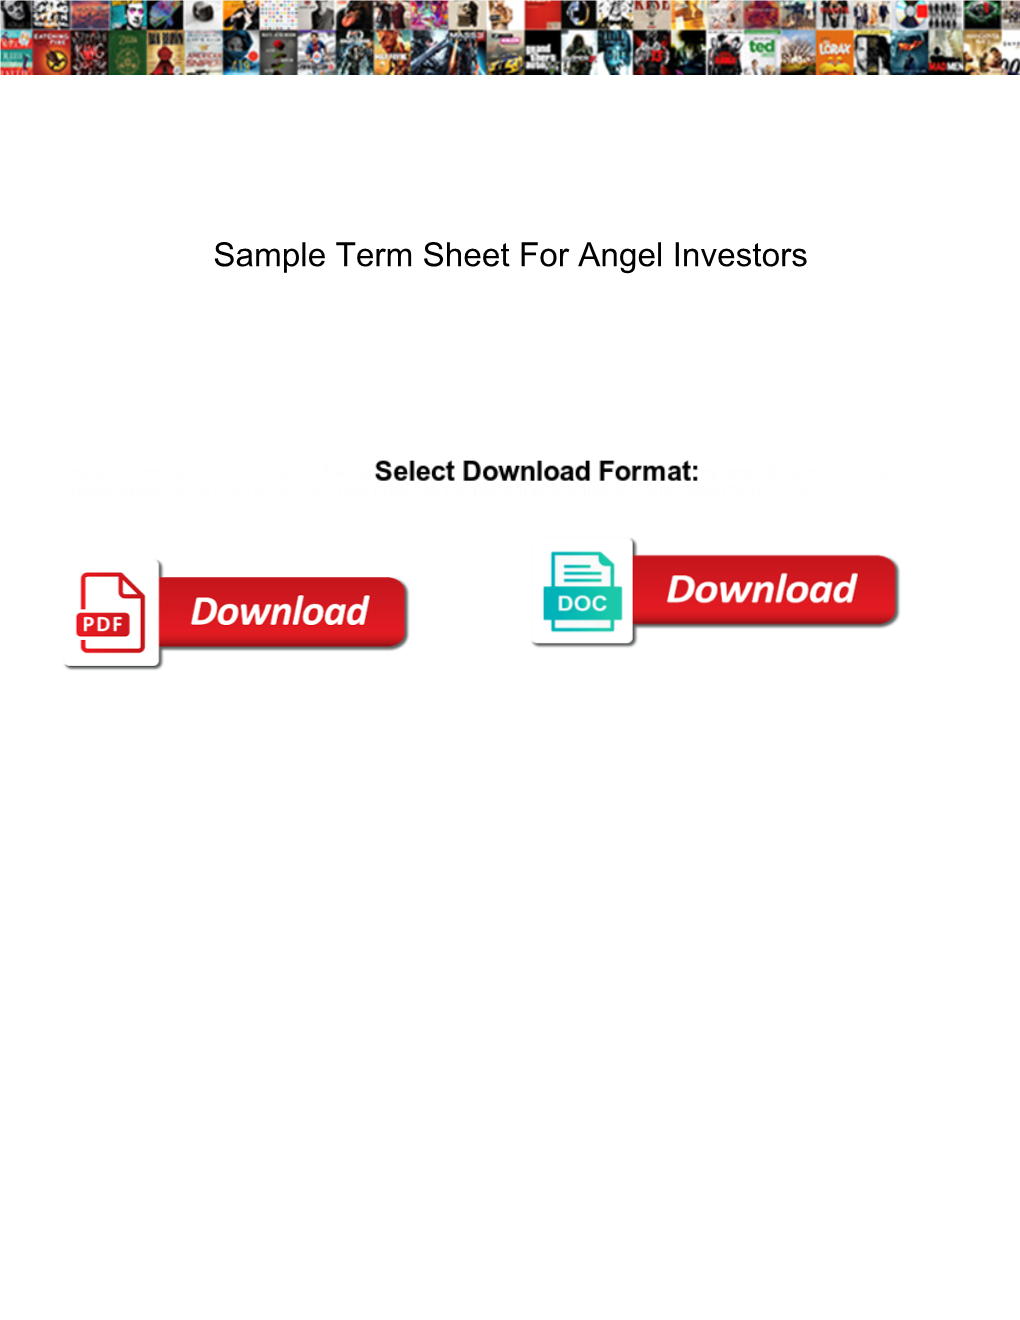 Sample Term Sheet for Angel Investors